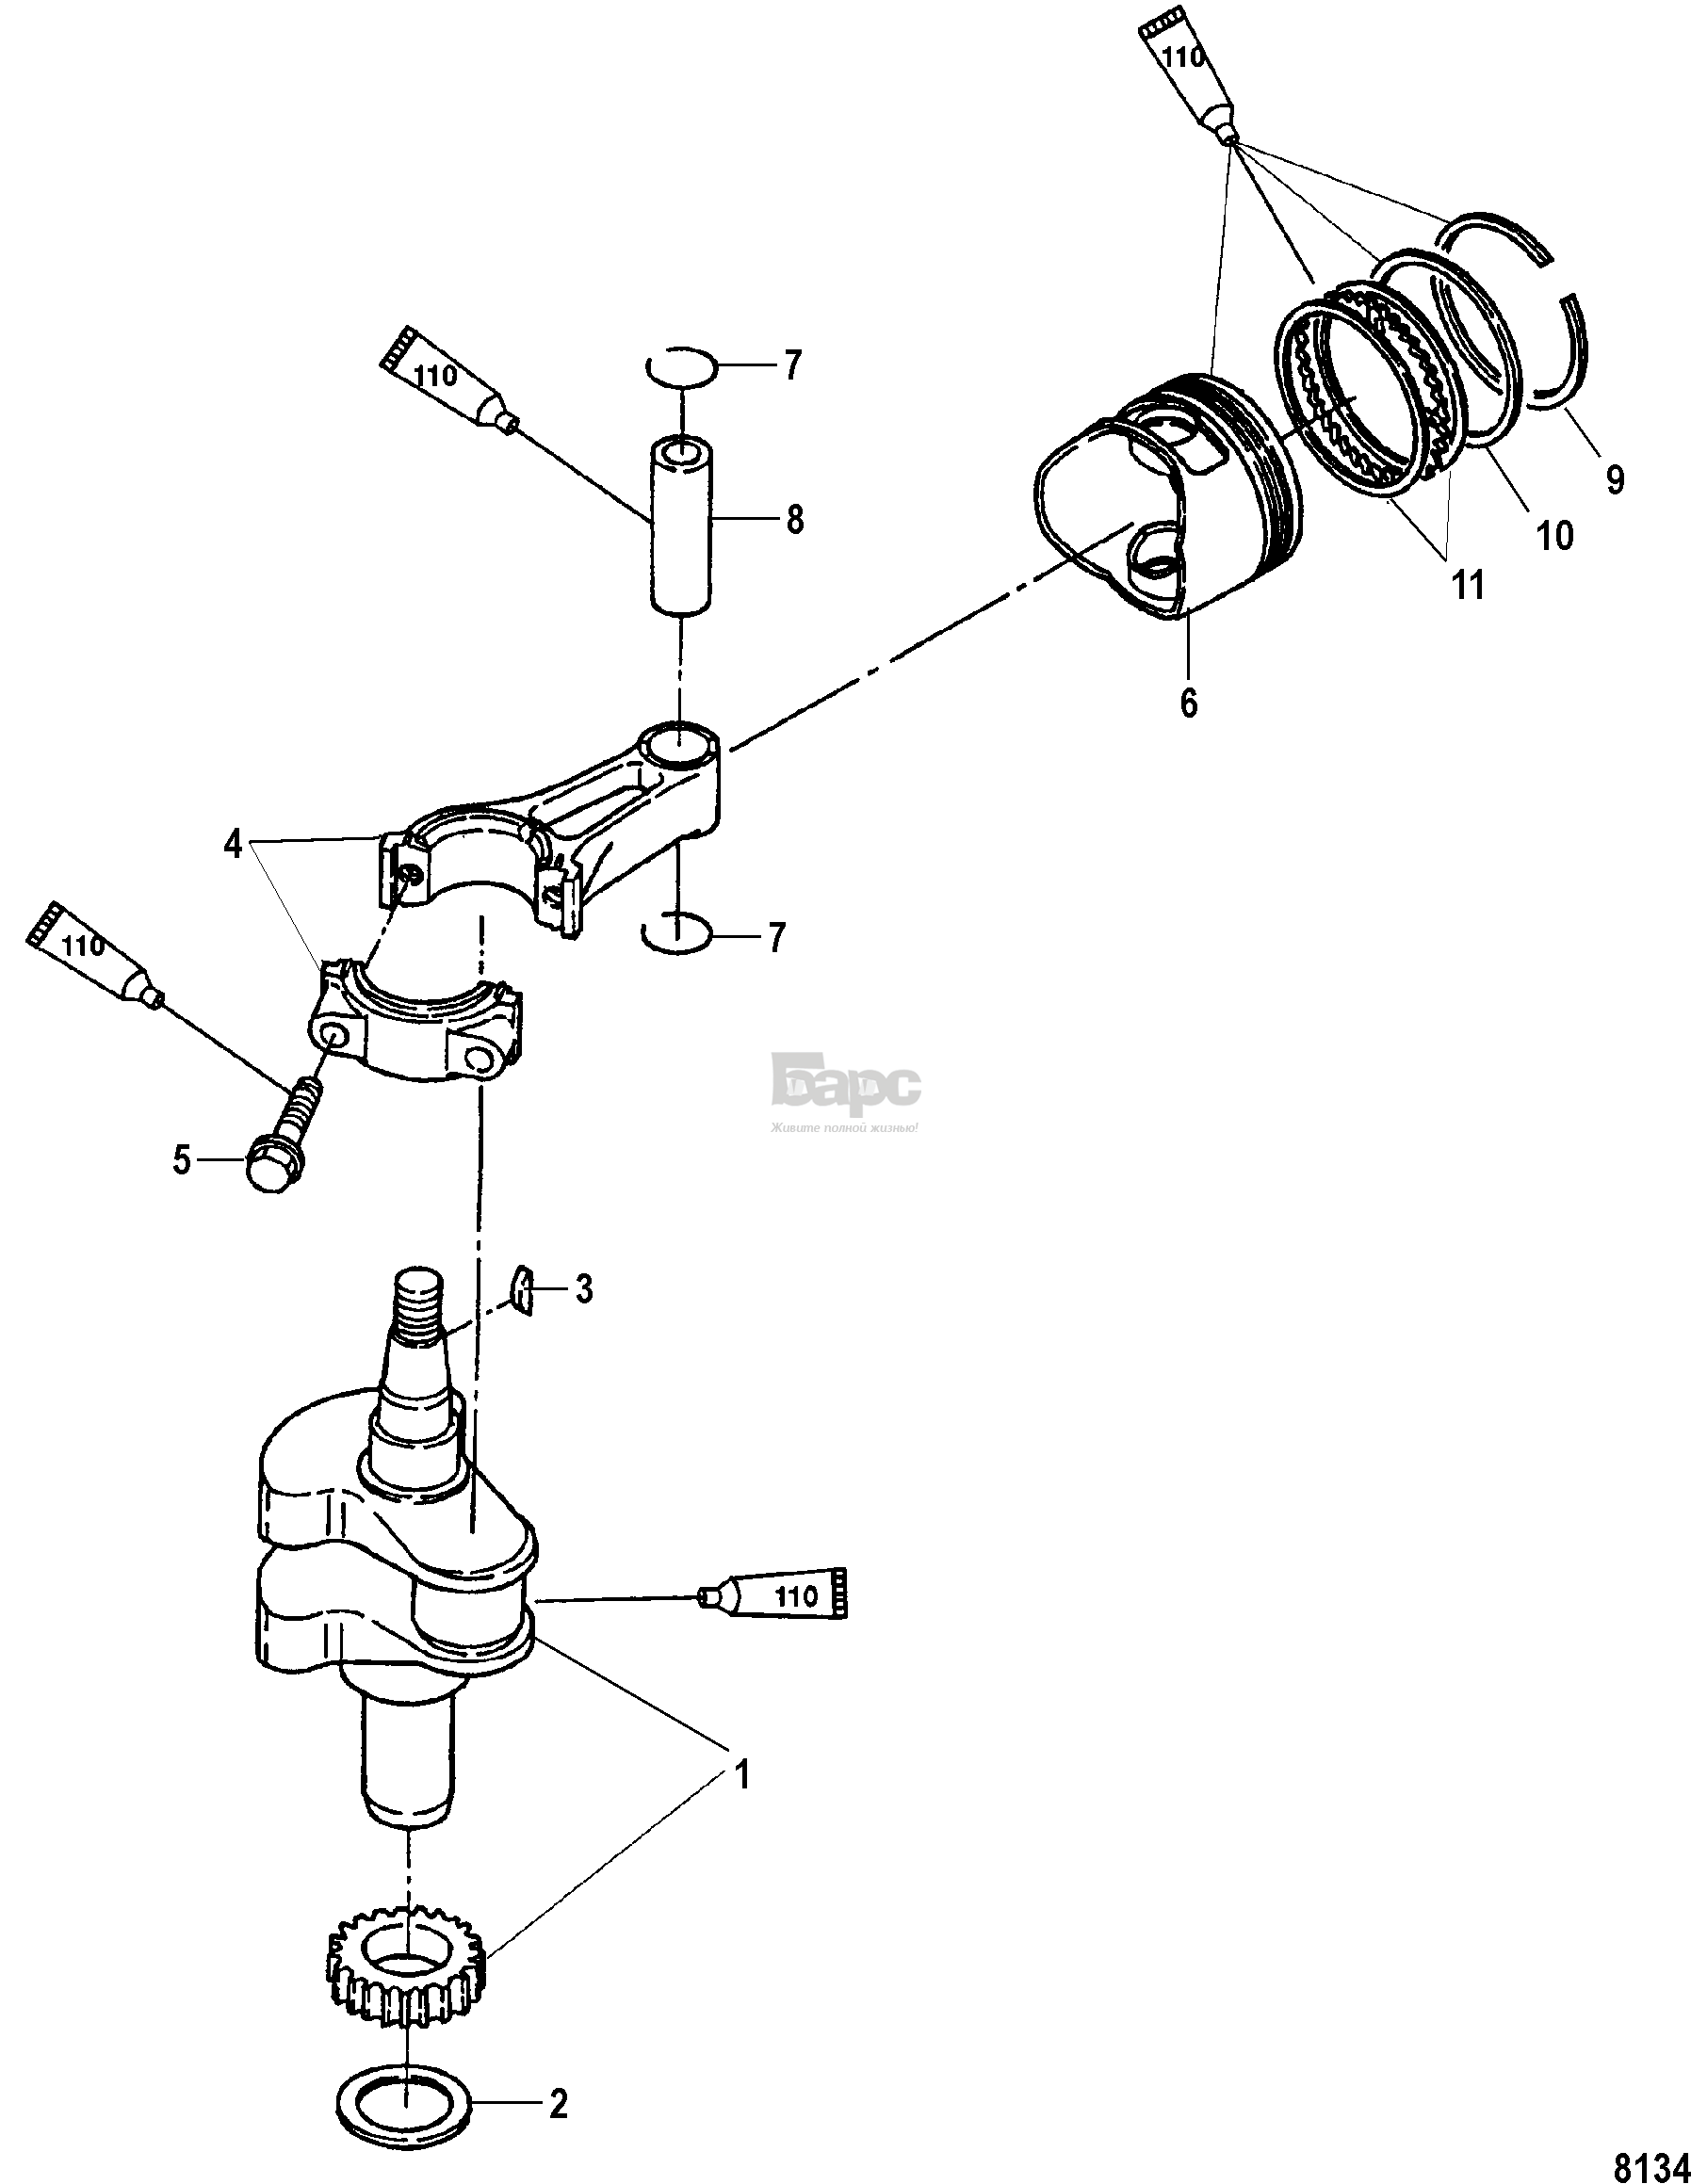 Crankshaft, Piston and Connecting Rods